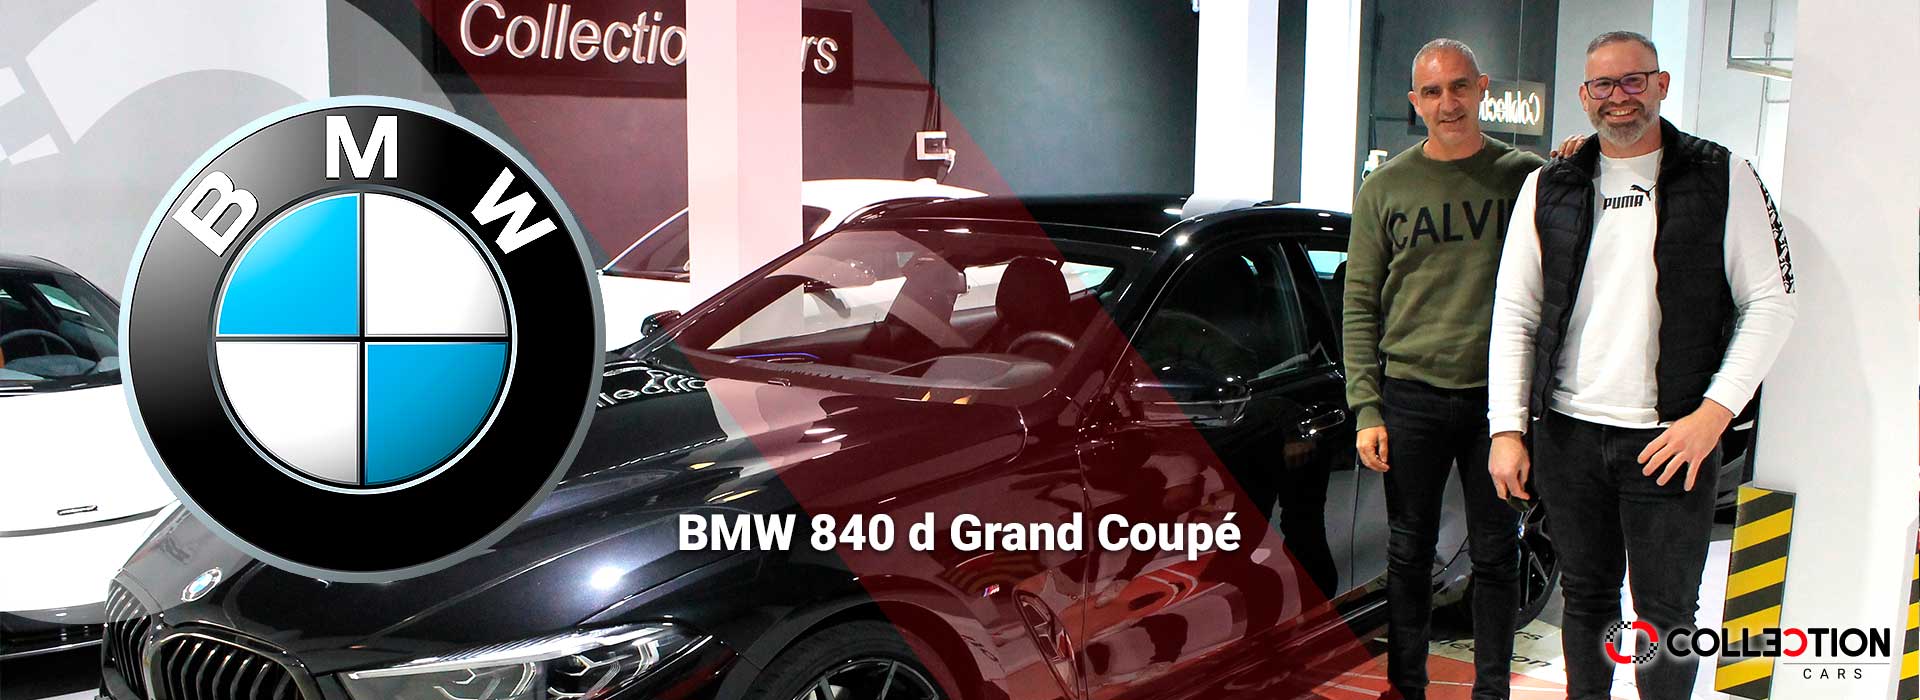 BMW 840 d Grand Coupé